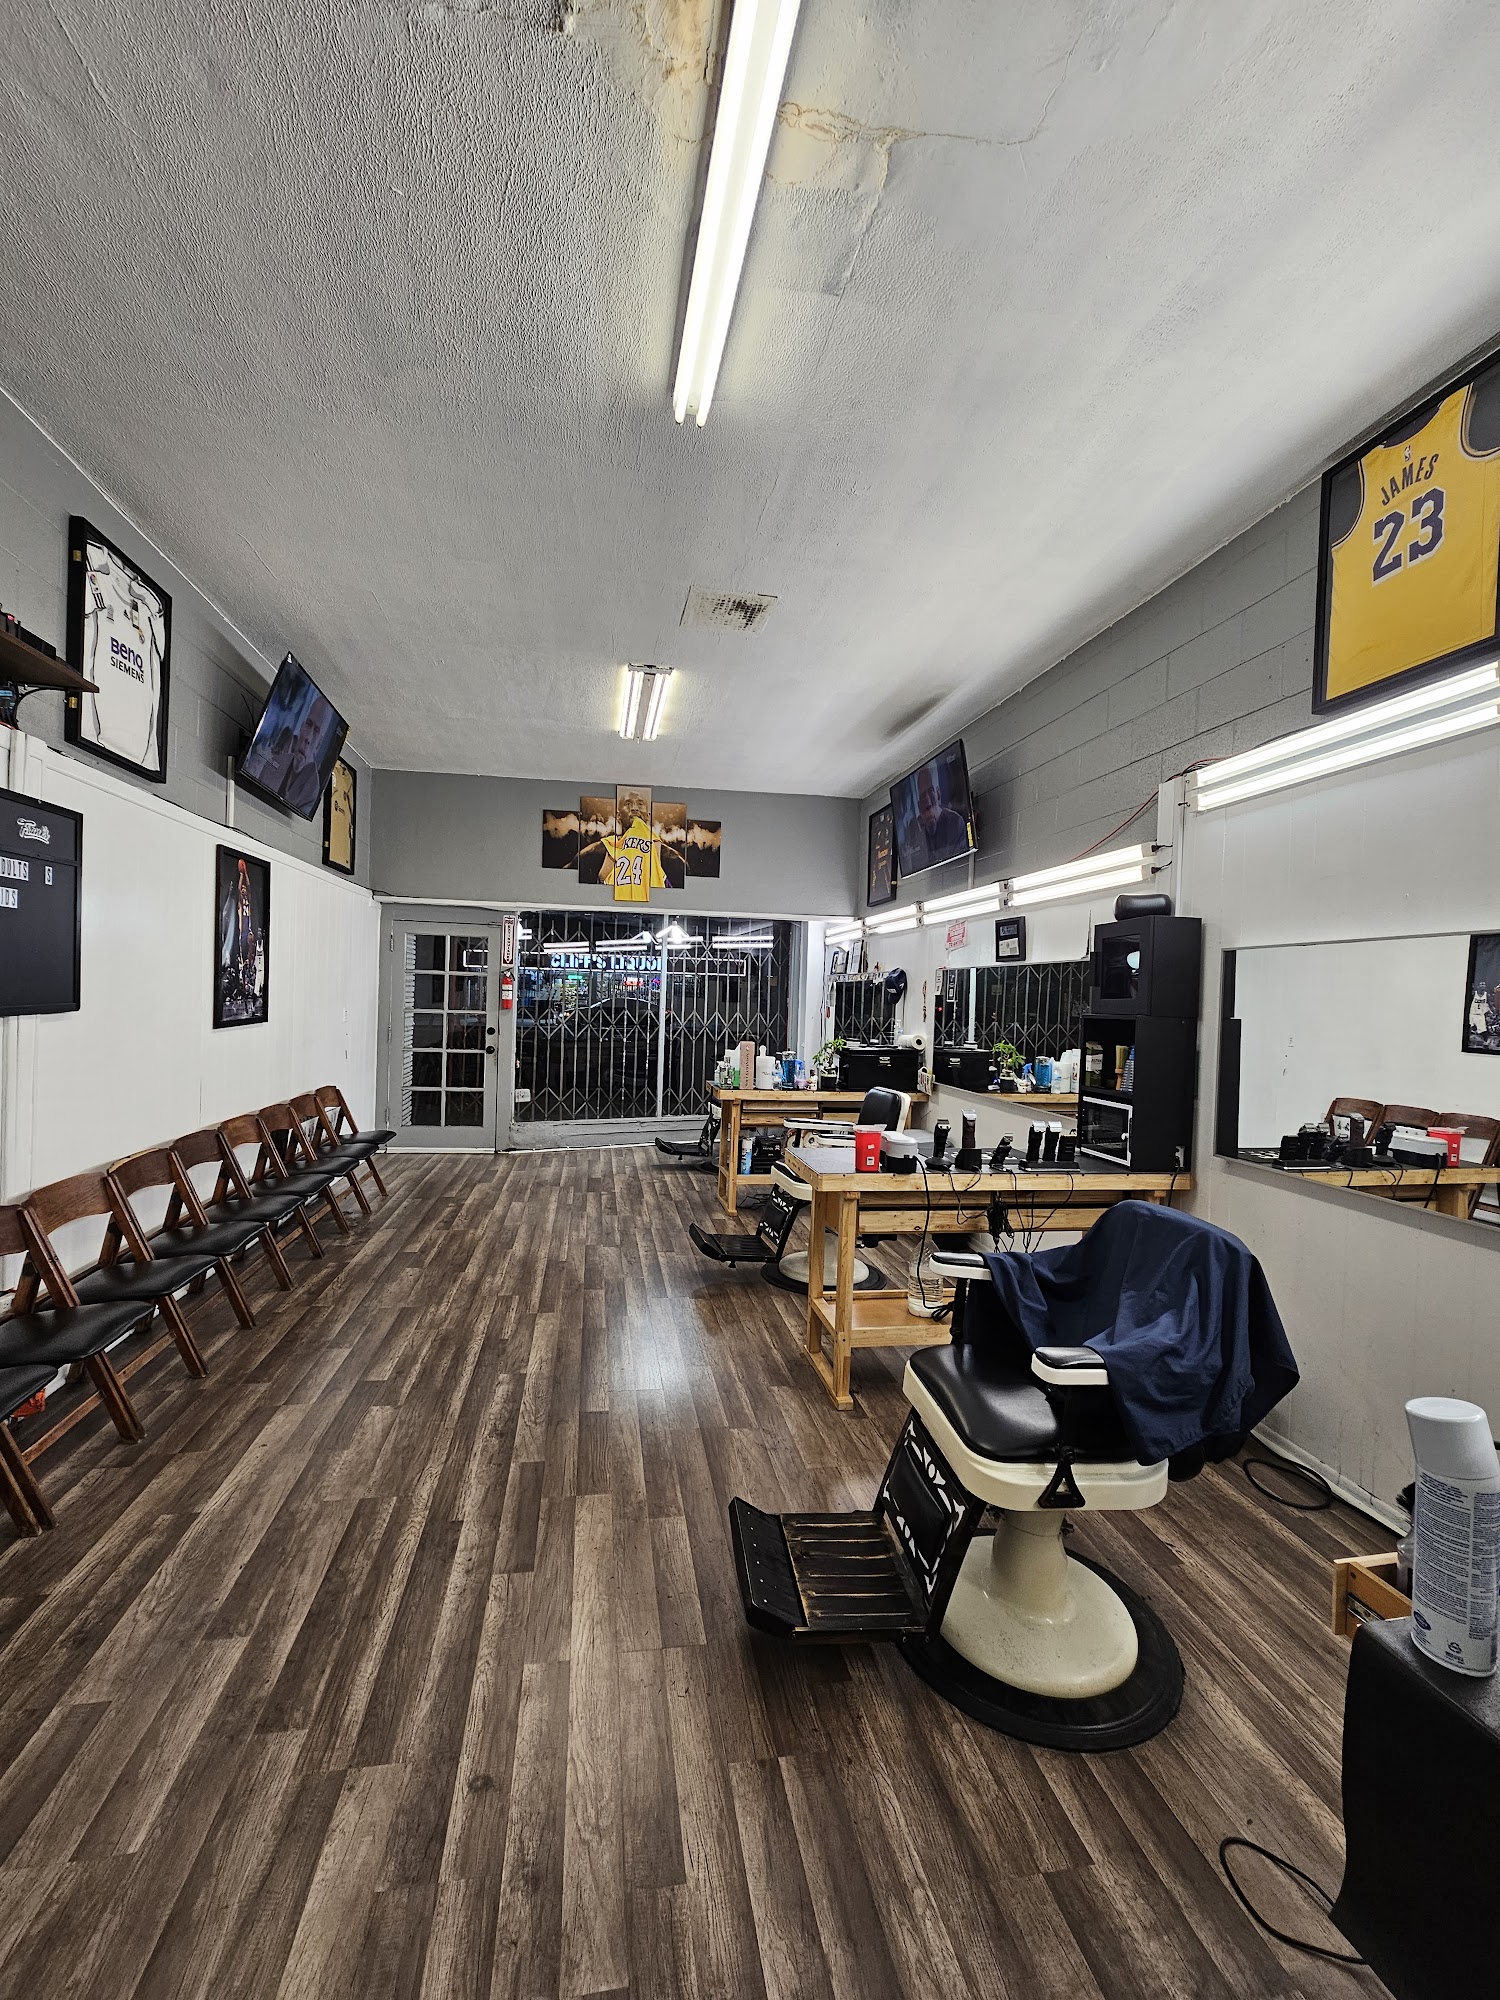 Frank's Barbershop